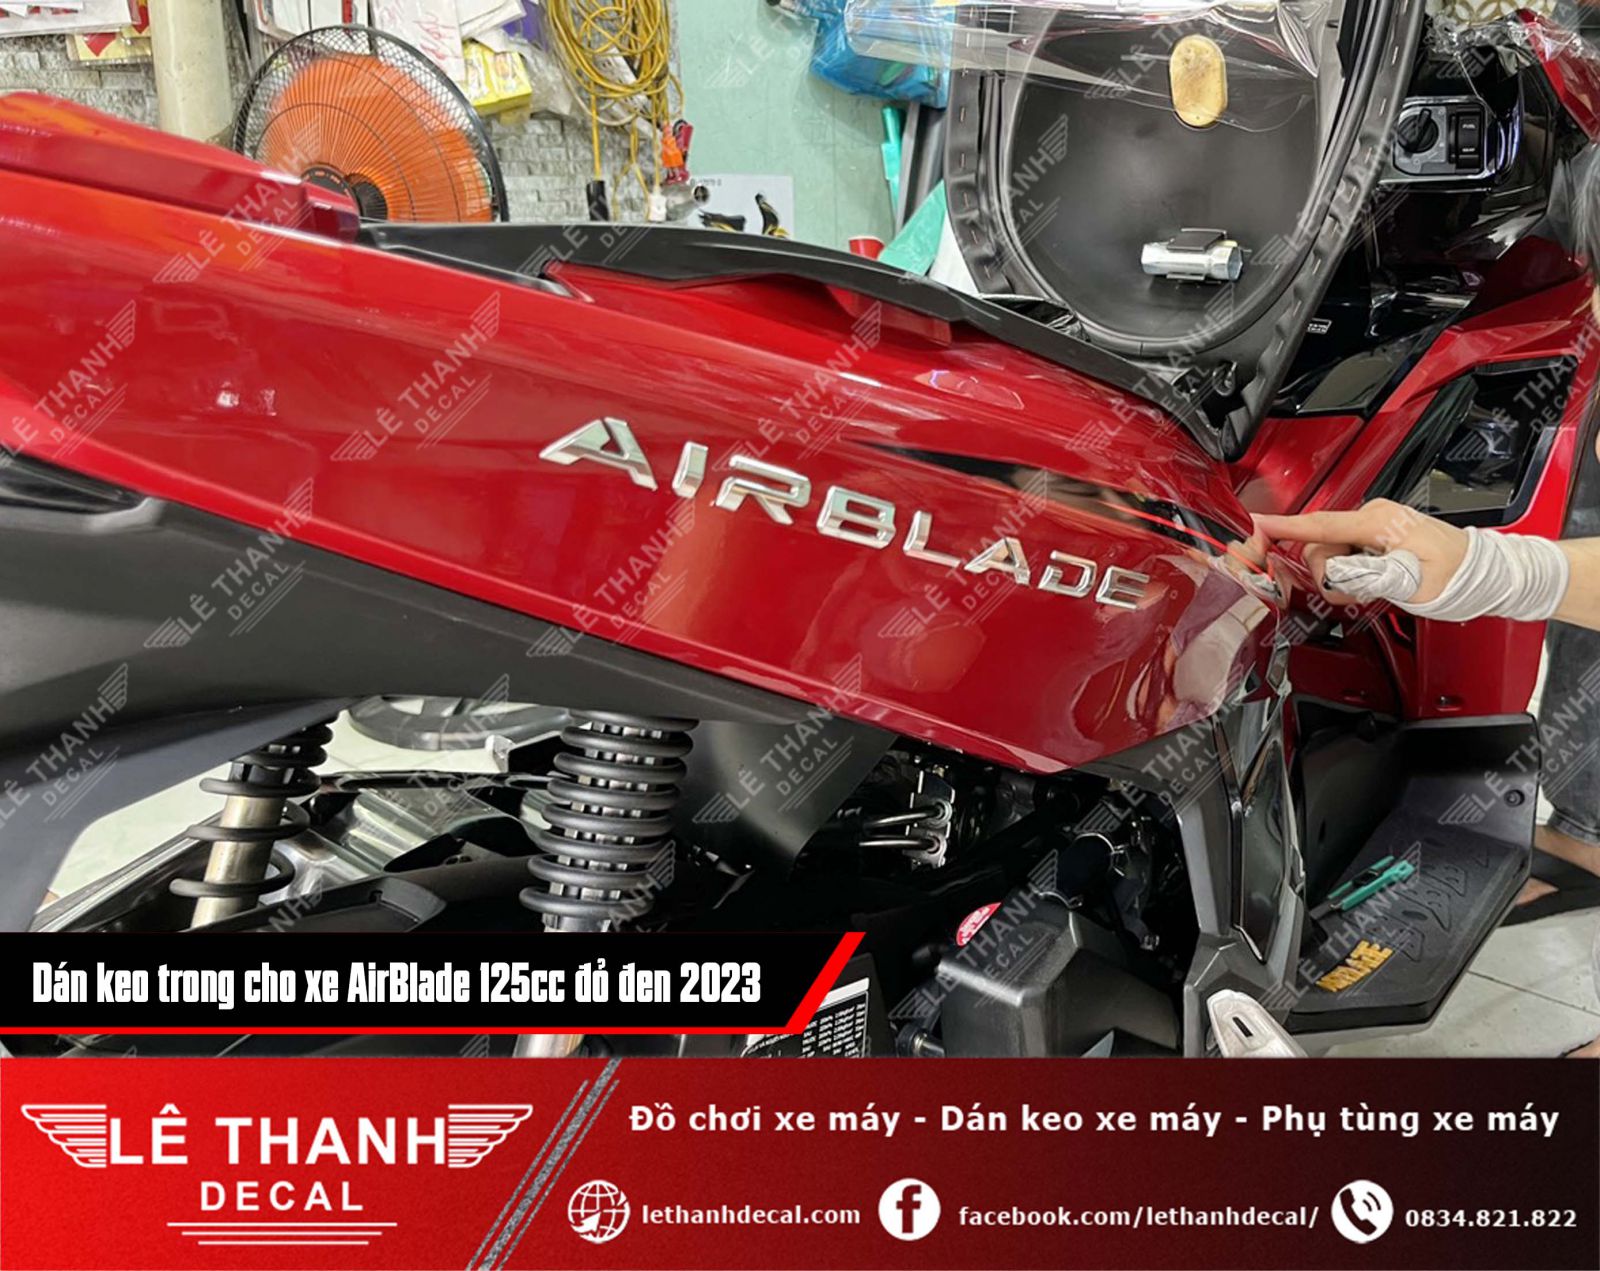 Dán keo trong xe máy AirBlade 125cc đỏ đen 2023